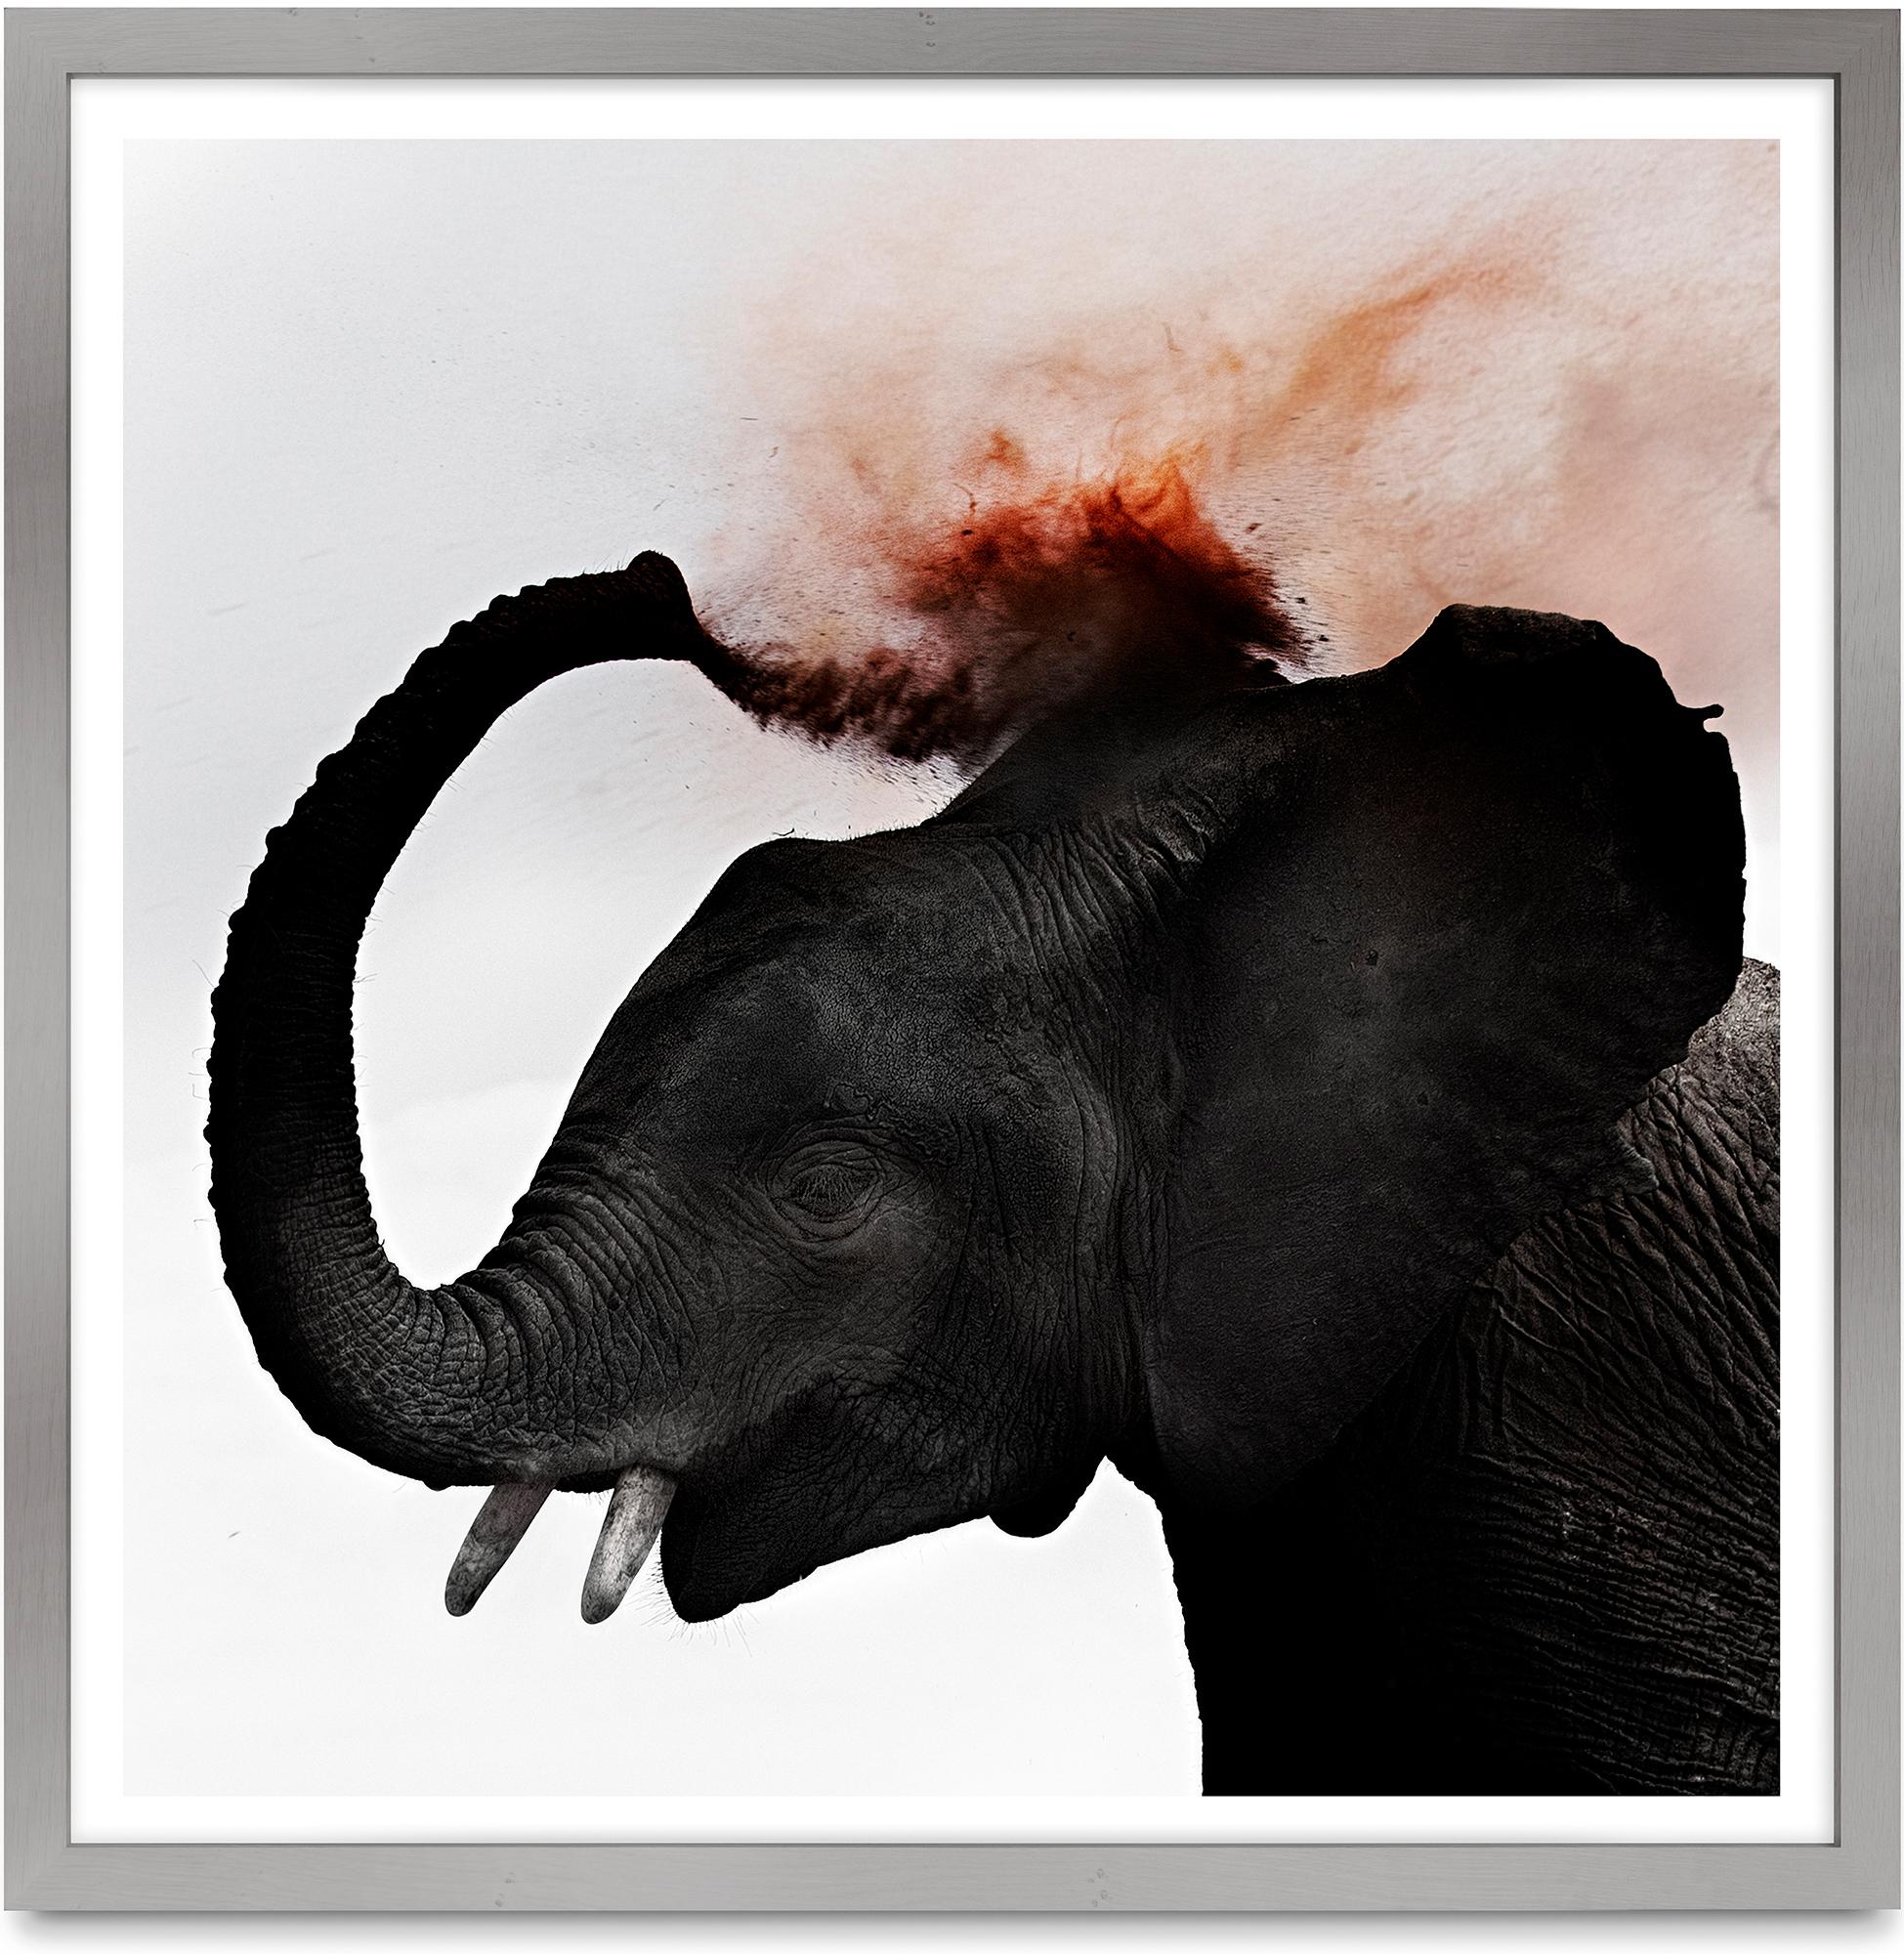 Dust III, Kenya, Elephant, animal, wildlife, color photography, africa - Photograph by Joachim Schmeisser